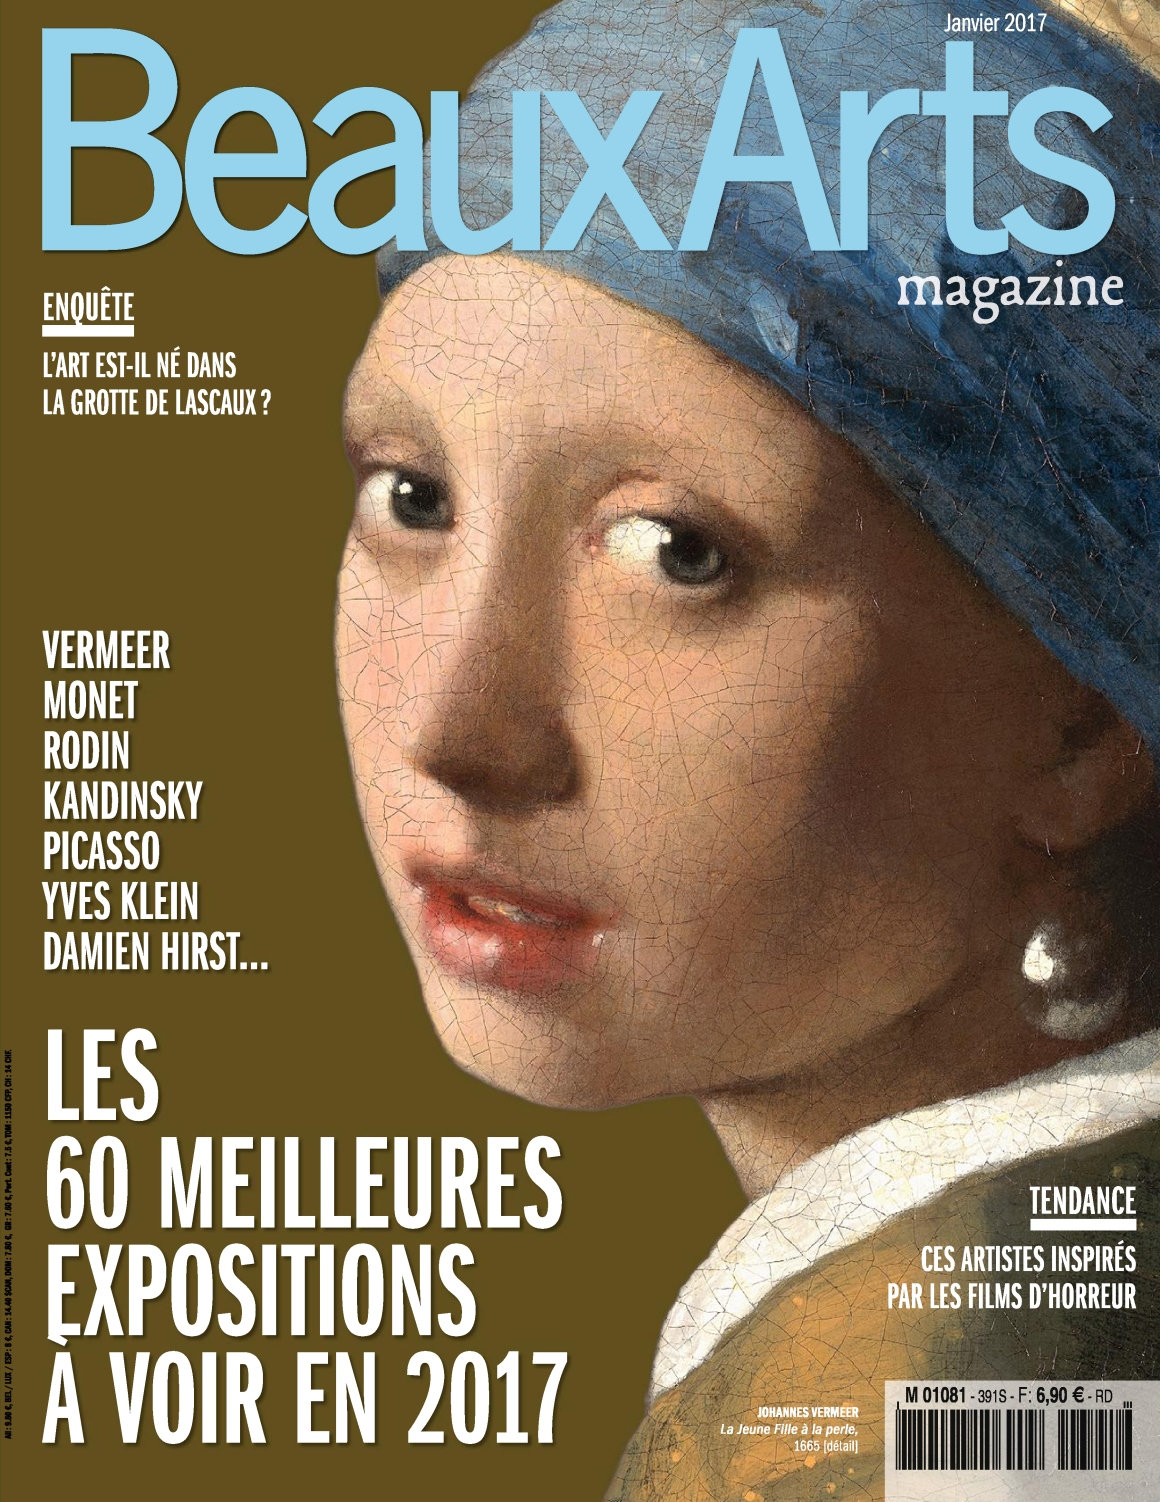 Beaux Arts magazine N°391 - Janvier 2017 